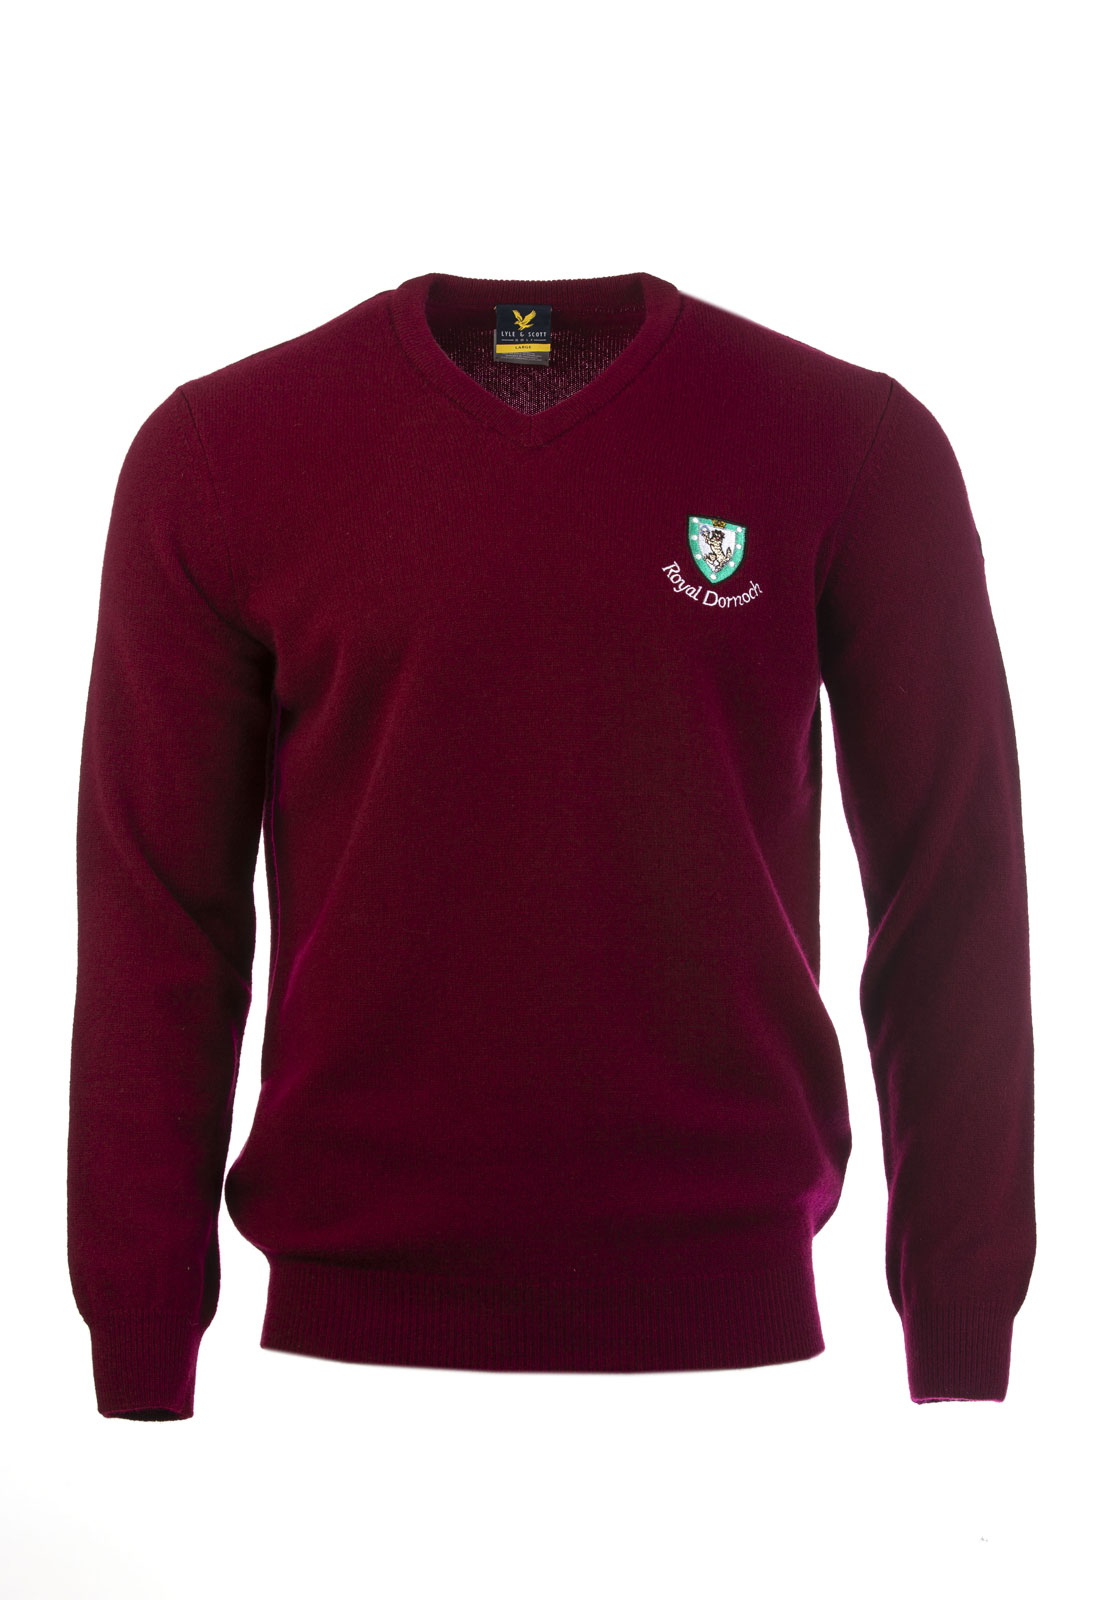 Lyle & Scott Classic V-Neck Sweater - Royal Dornoch Pro Shop1094 x 1600